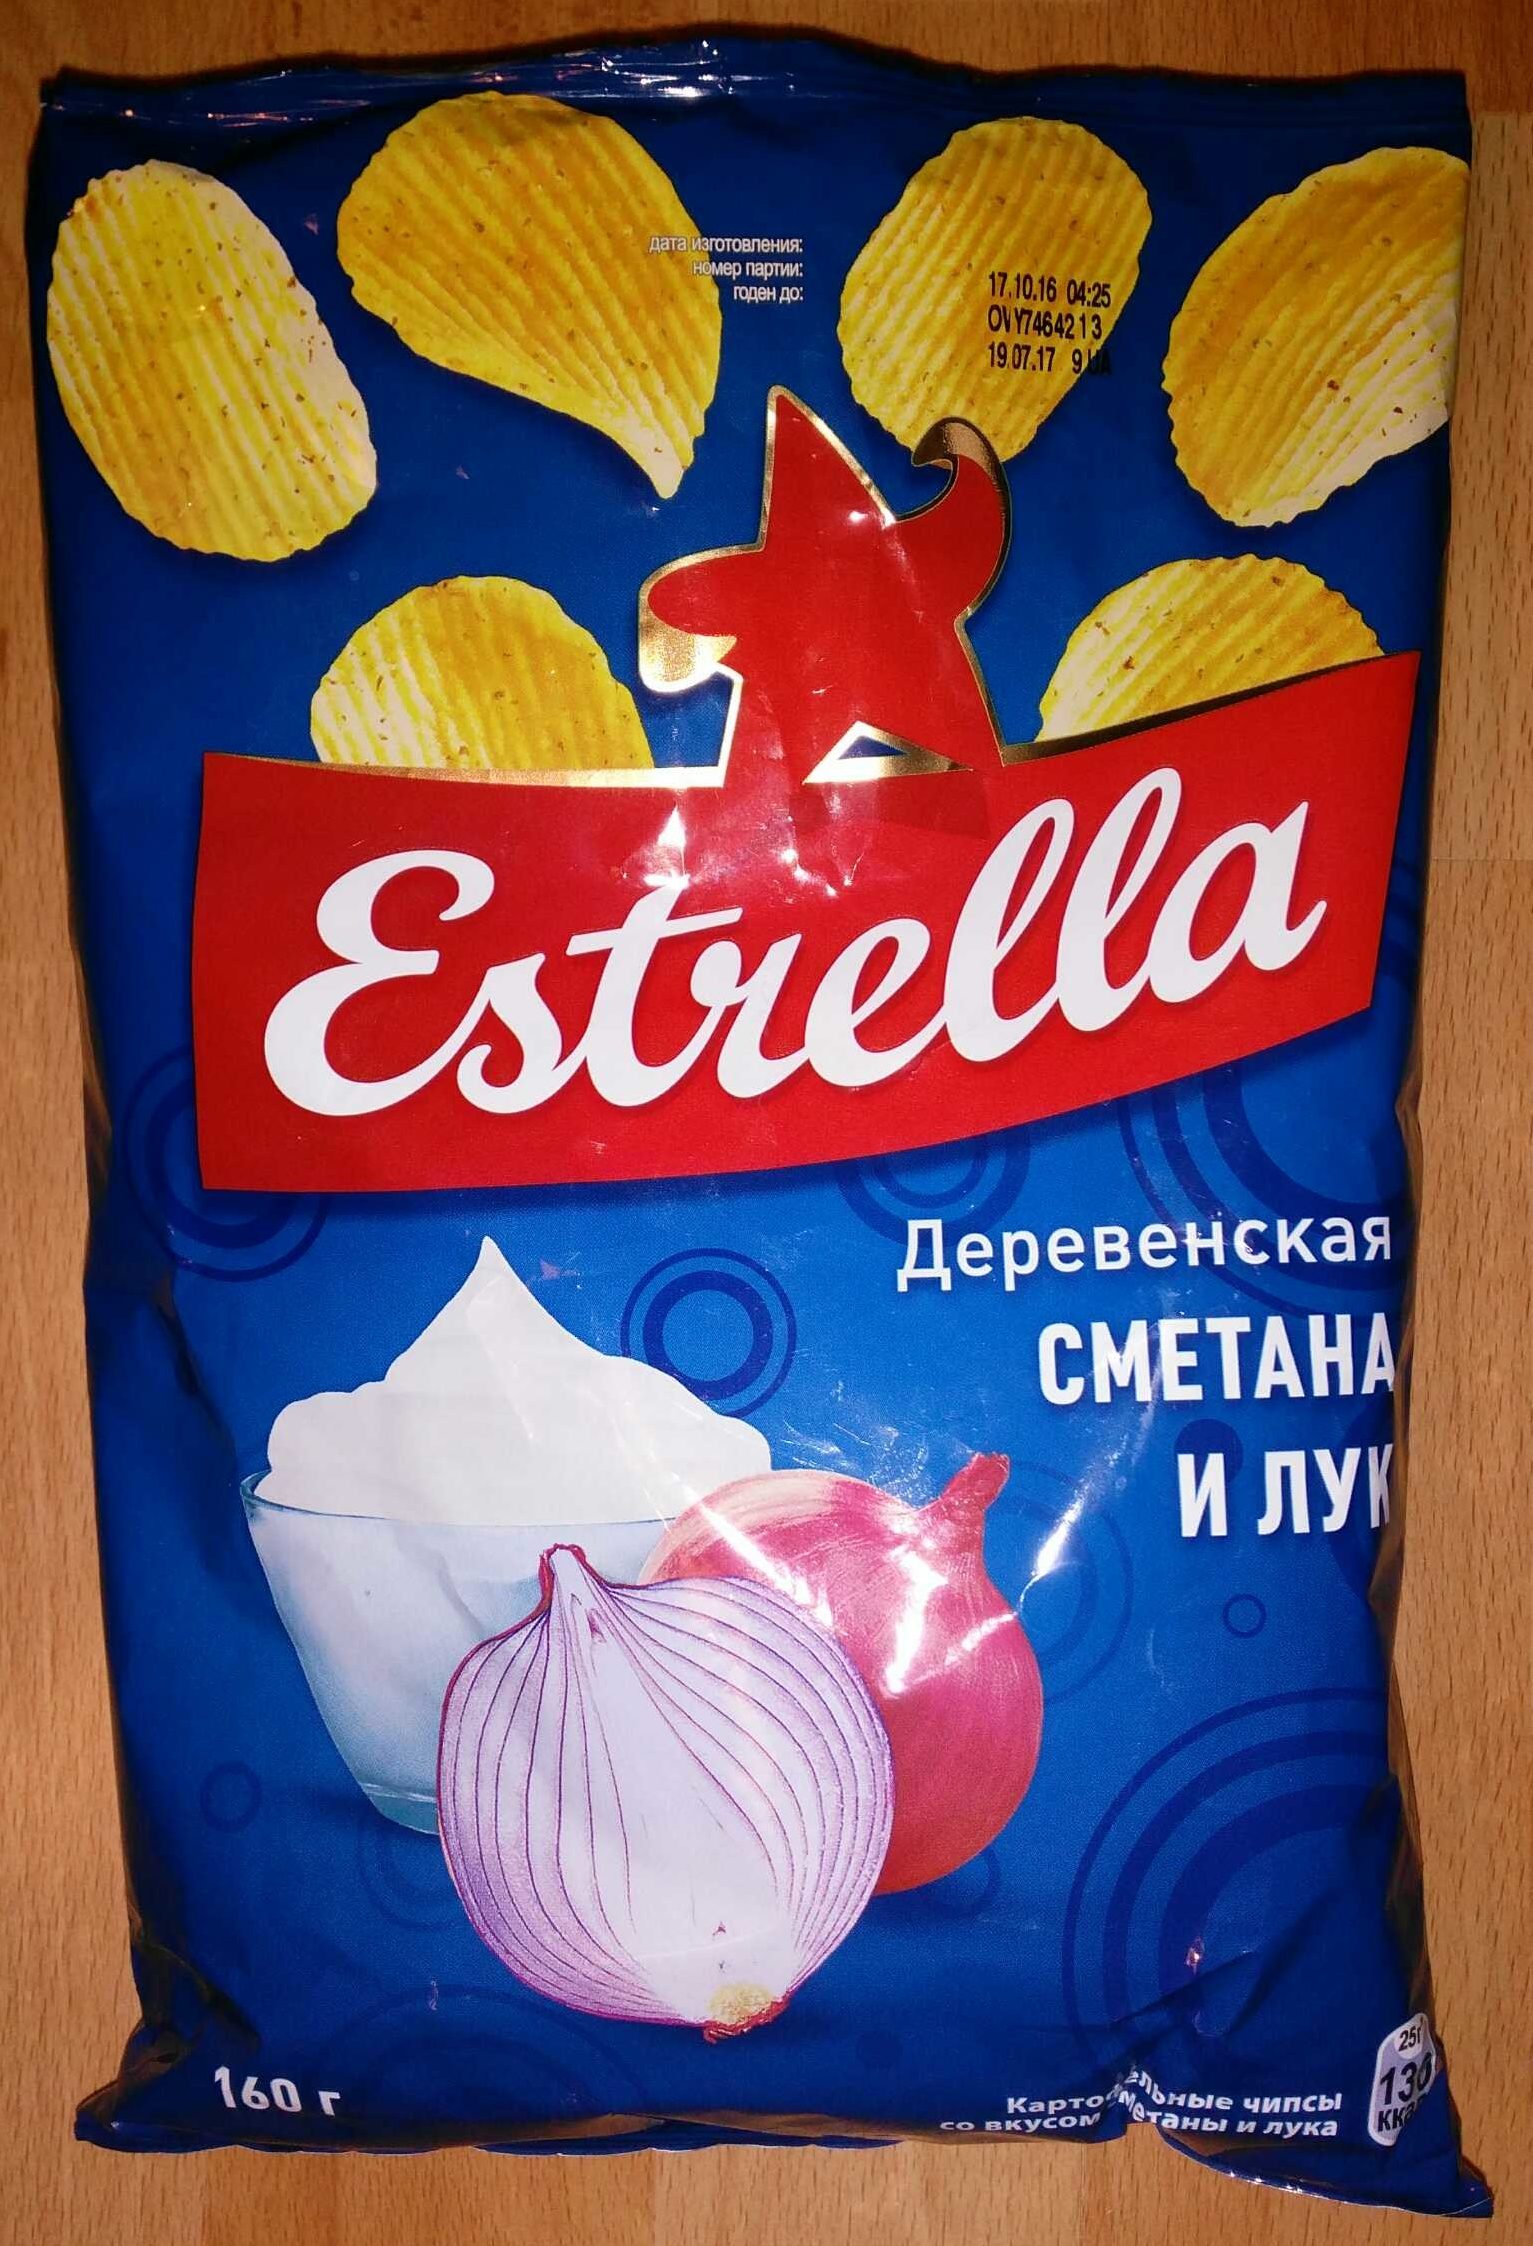 Estrella Деревенская «Сметана и лук» - Product - ru